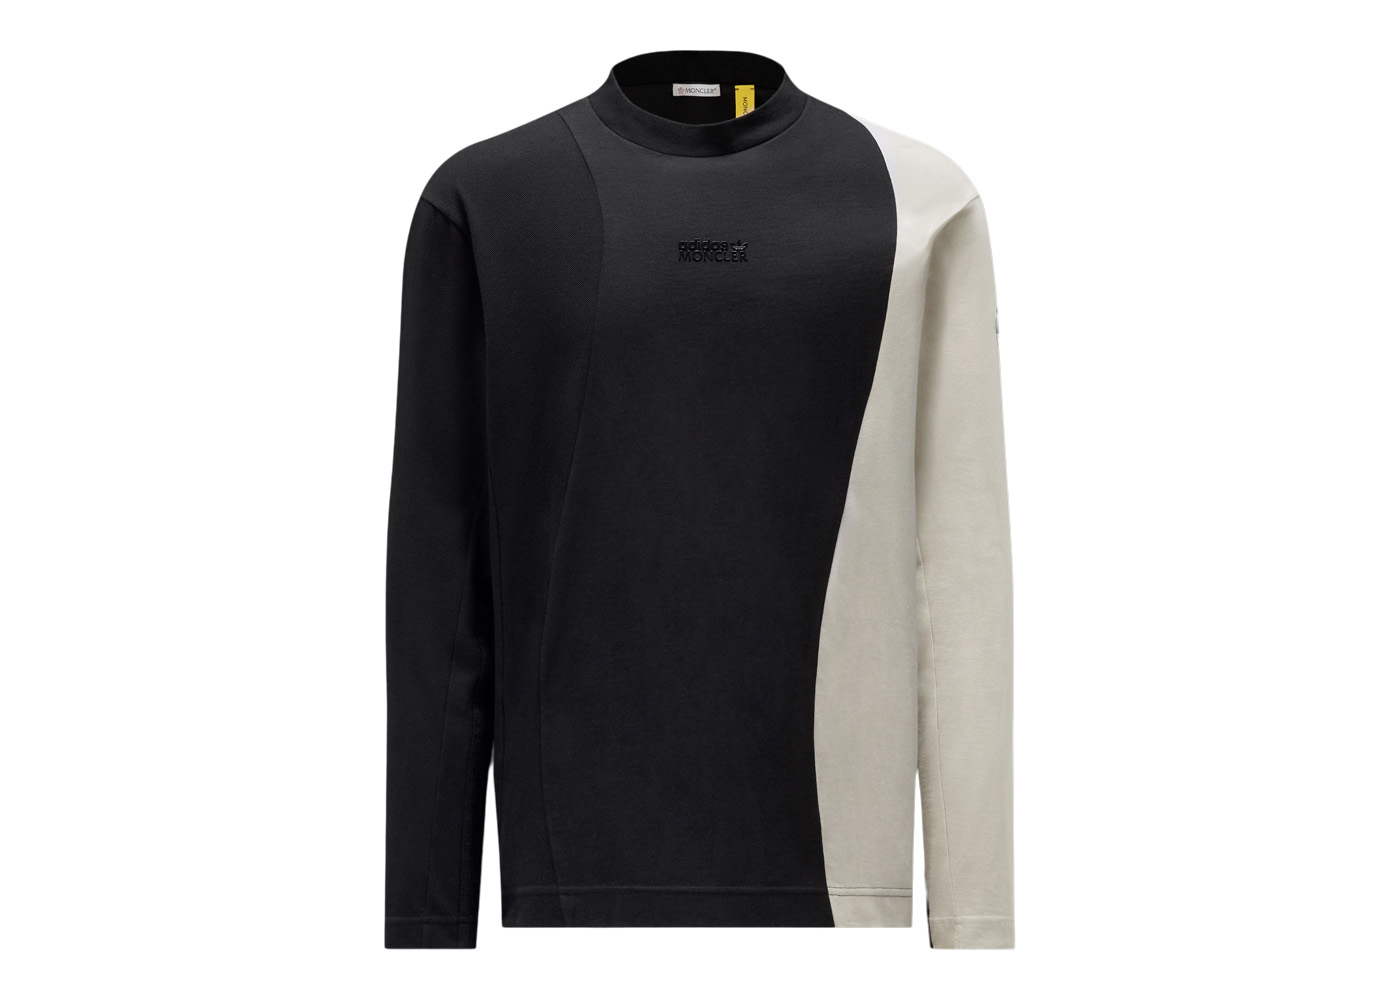 Moncler x adidas Originals Jersey Long Sleeve T-shirt Black & White